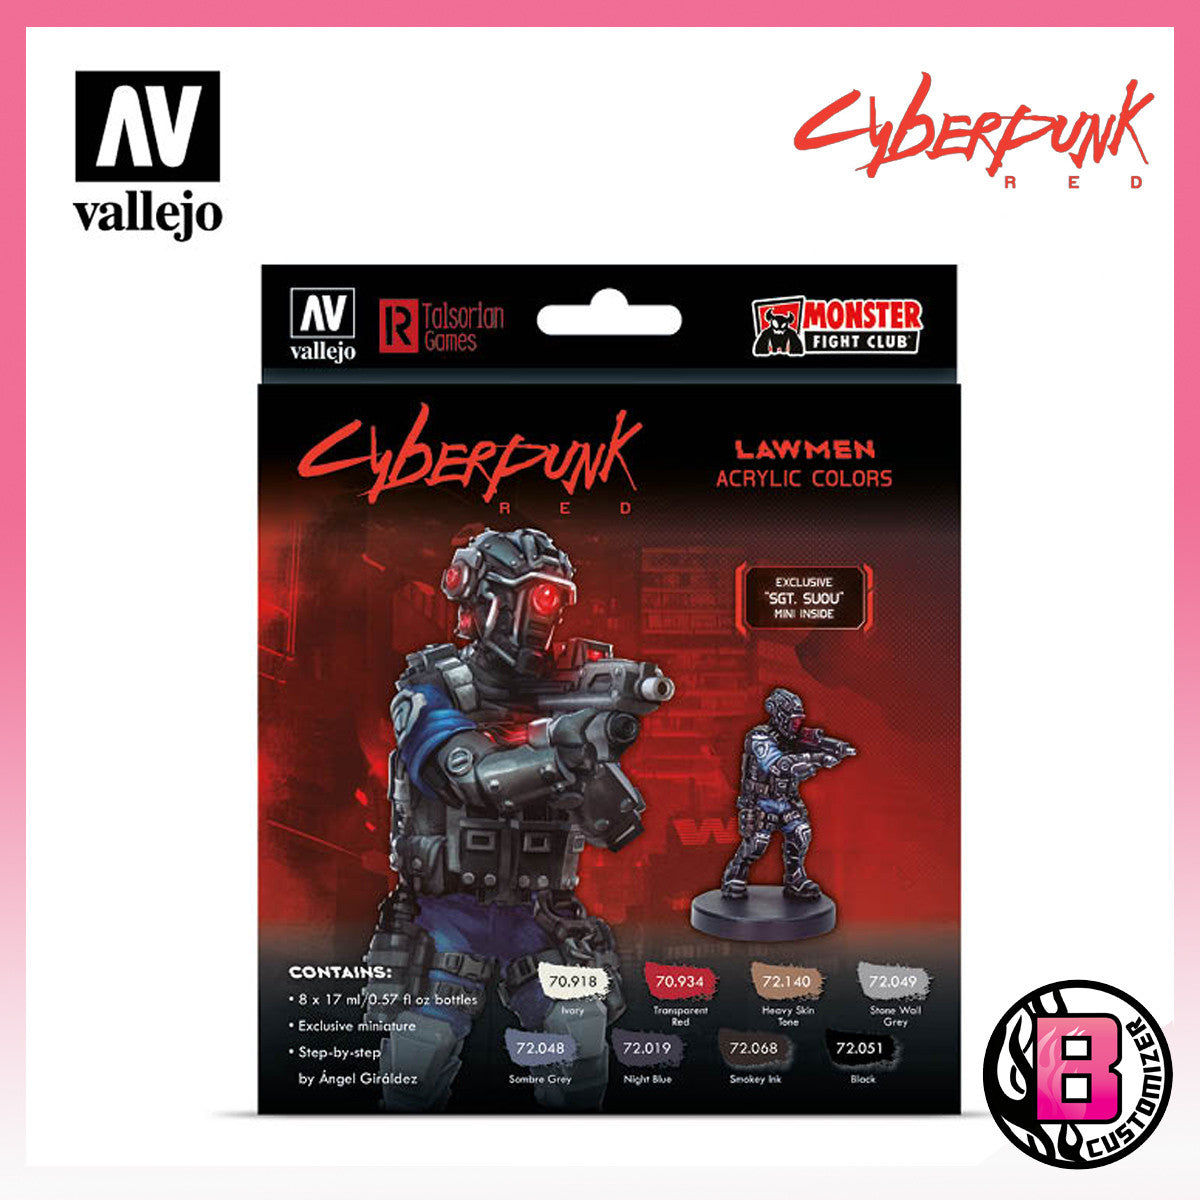 Vallejo X Cyberpunk Red: Lawmen Acrylic colors (72.308)